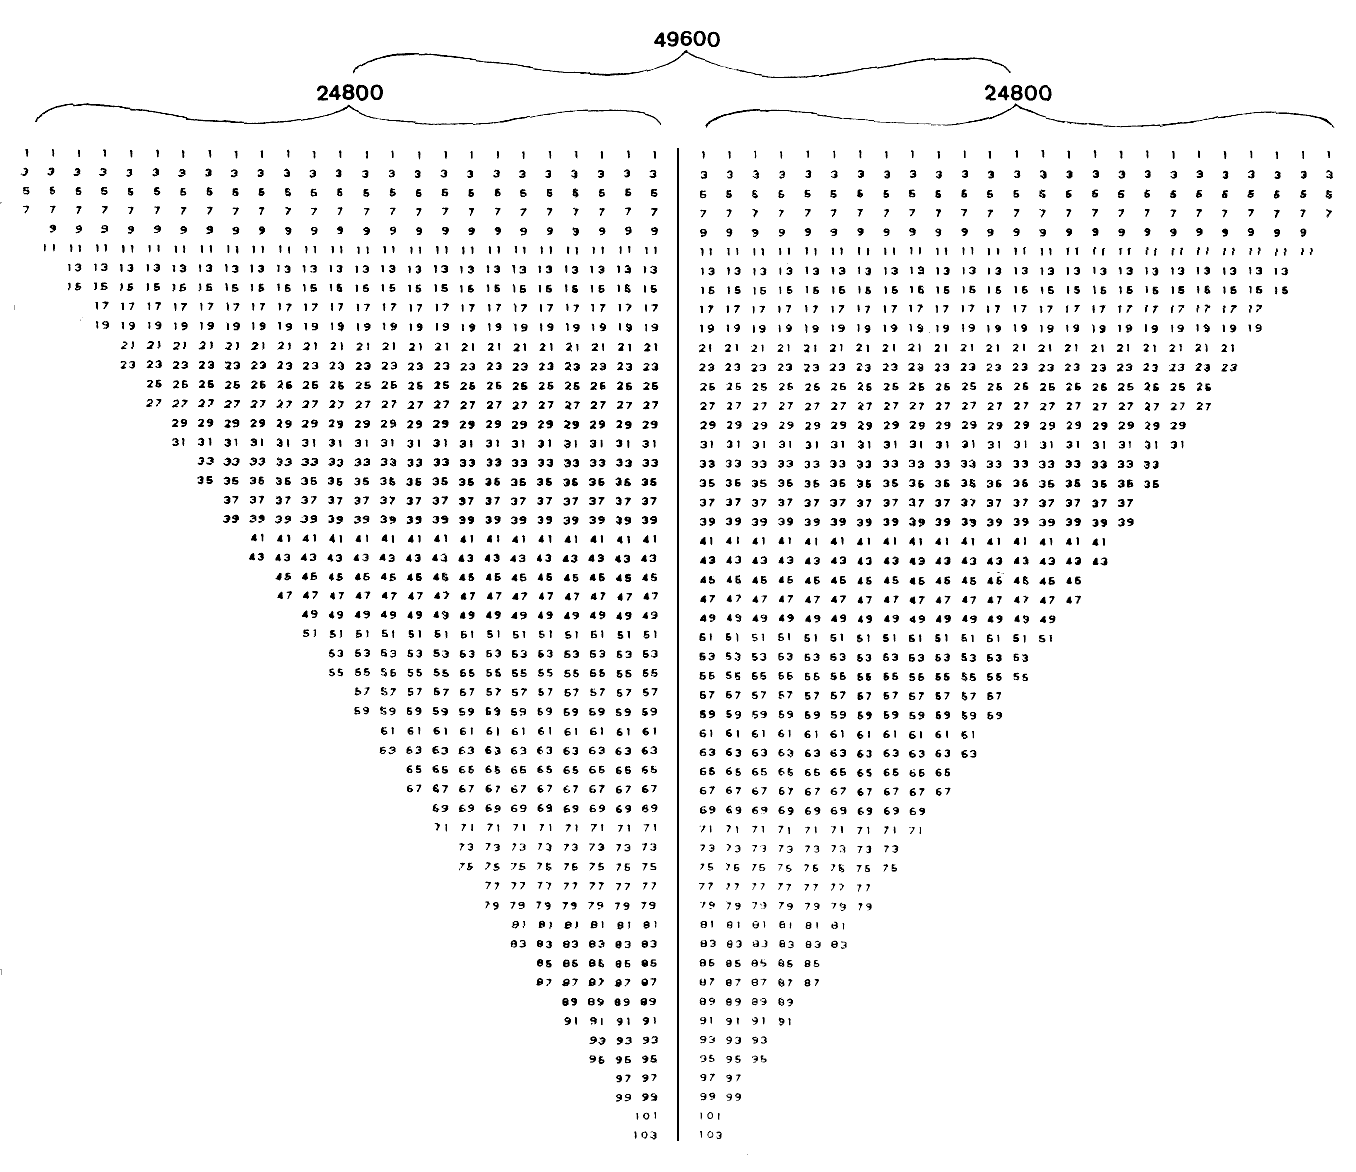 Arithmetic representation of 49600